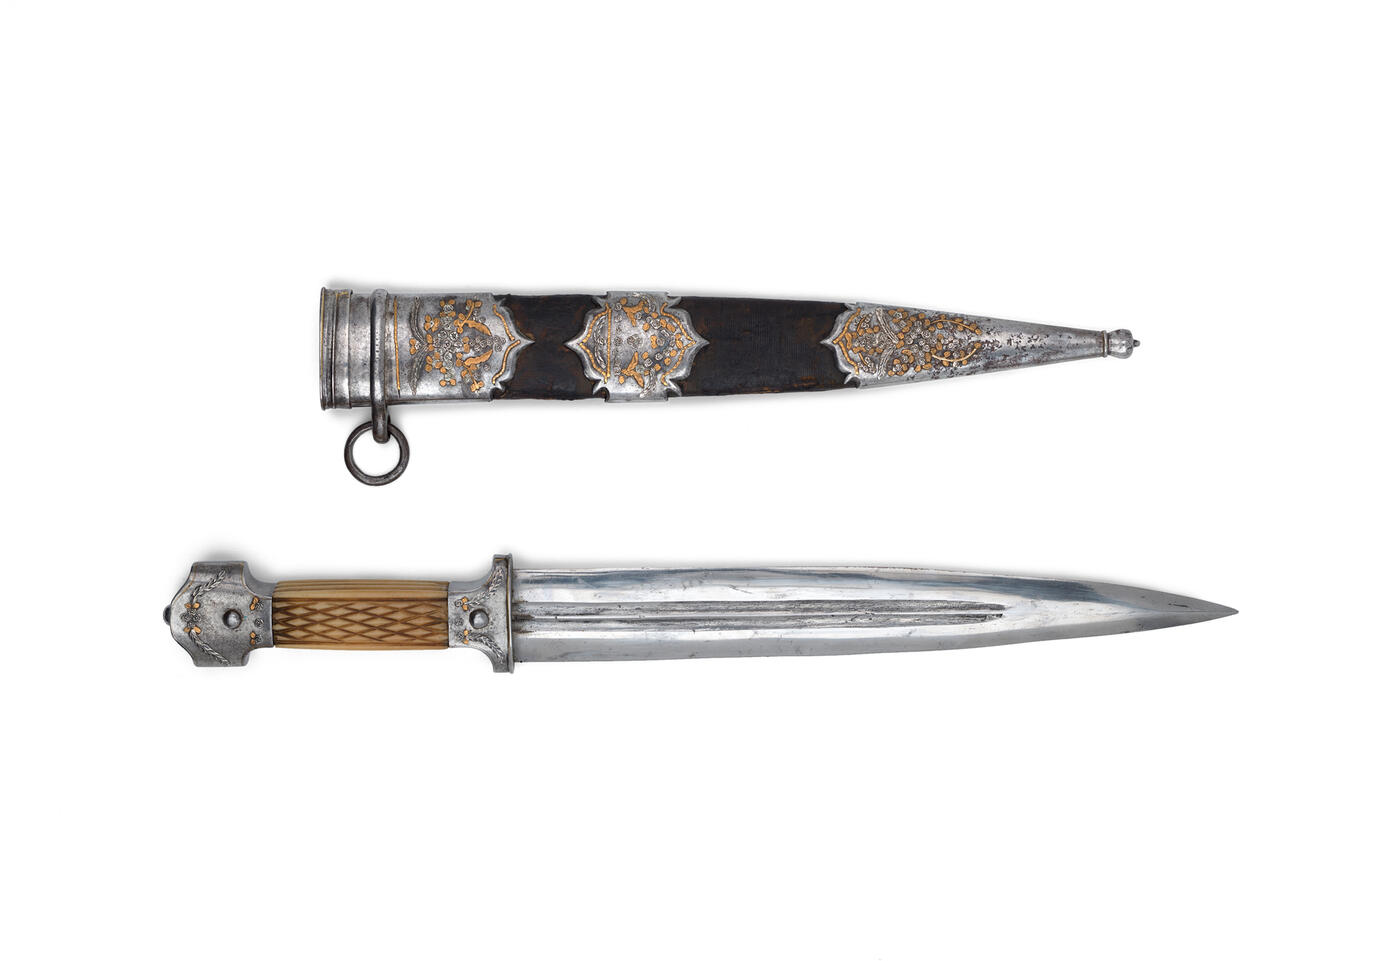 A Kama Dagger with Scabbard